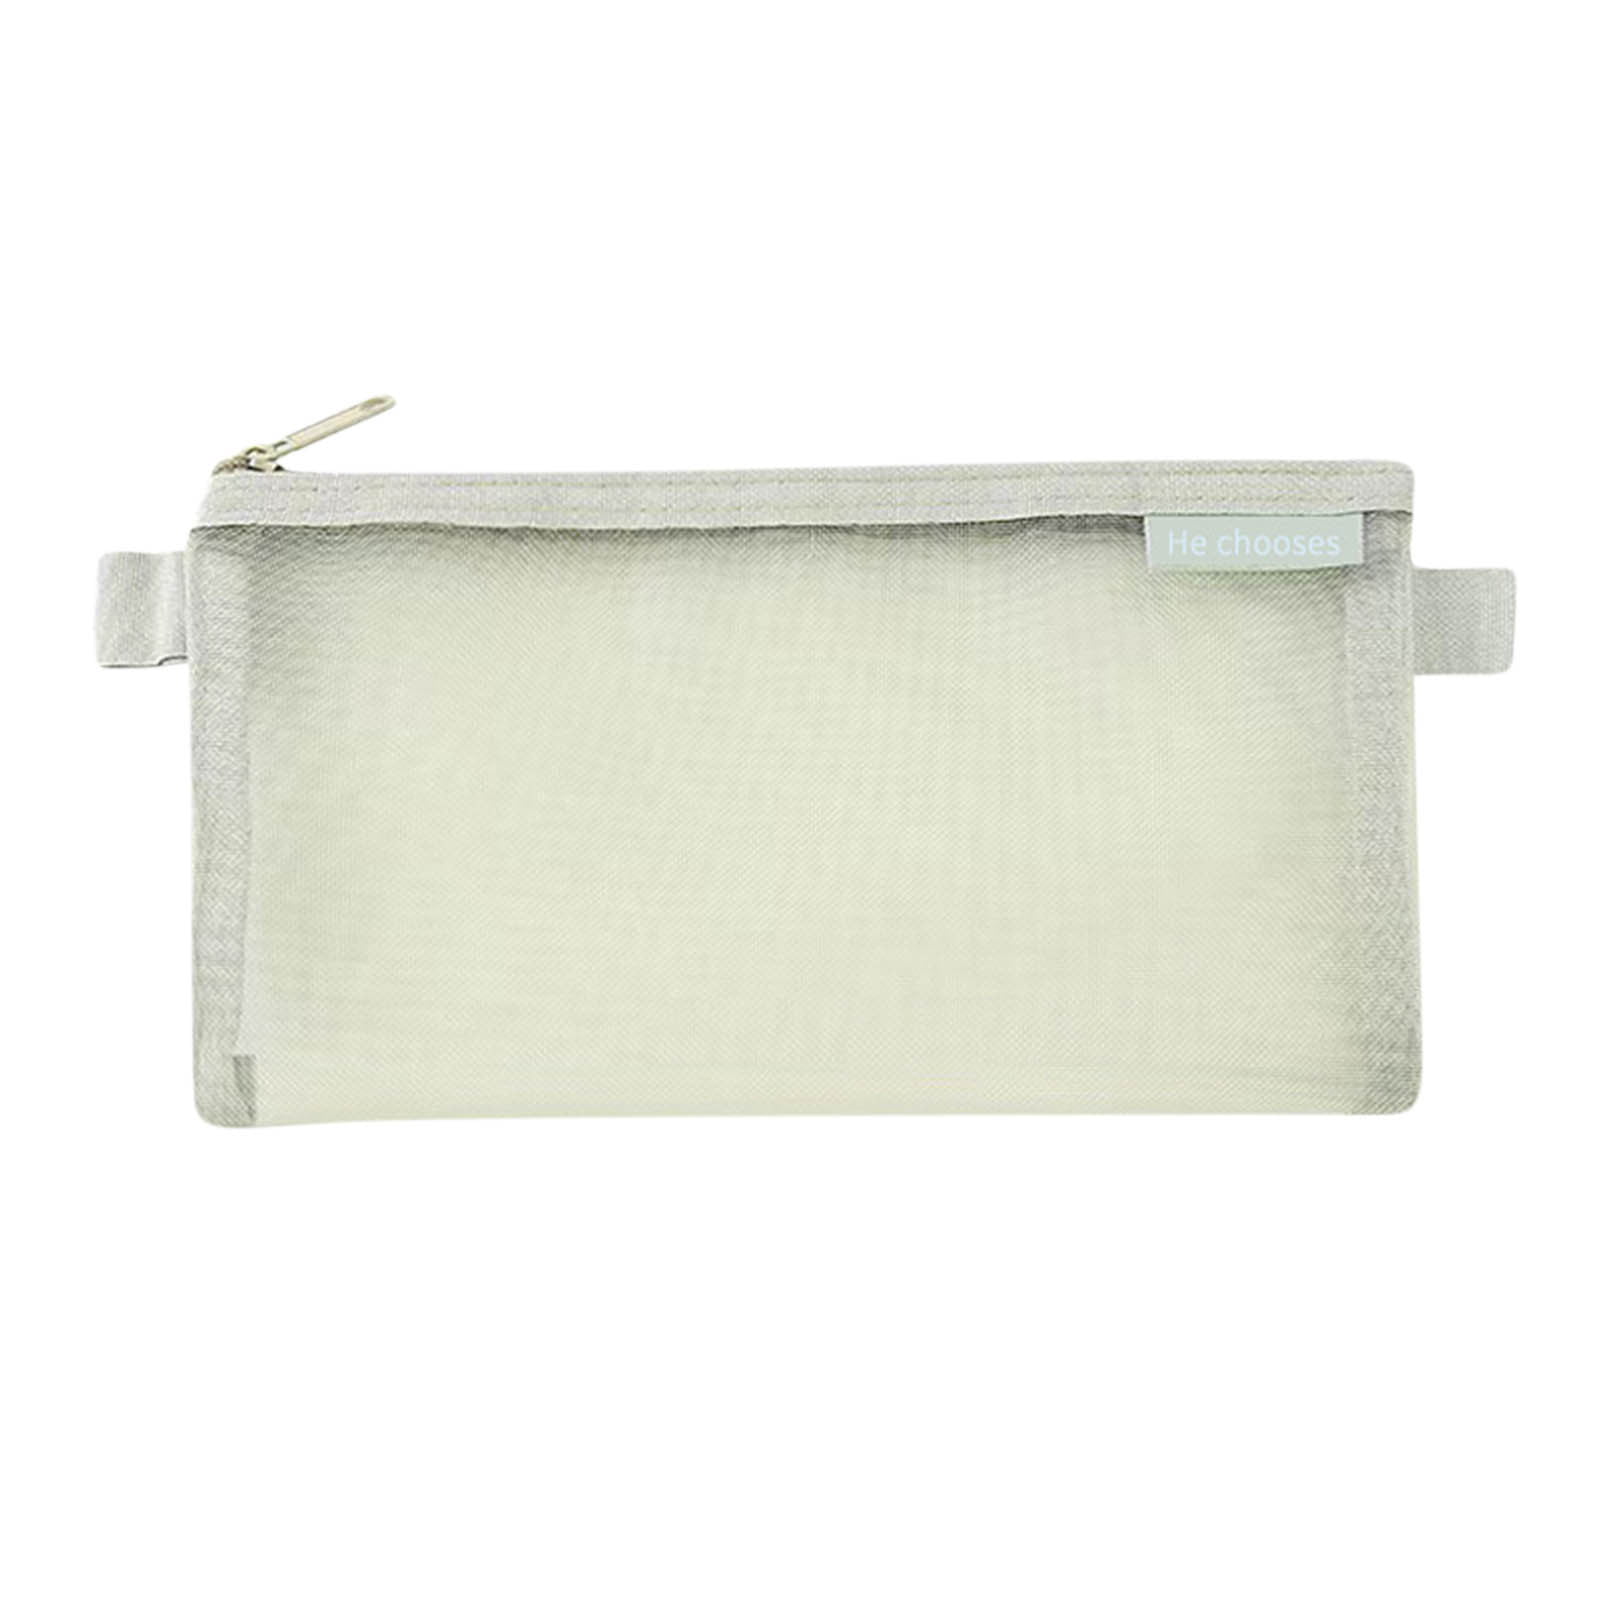 Aspire 60-Pack White Canvas Cosmetic Makeup Bag, Blank DIY Craft Lined Bag,  6-3/4 x 4-3/4 Inch (Brown Zipper) - Walmart.com